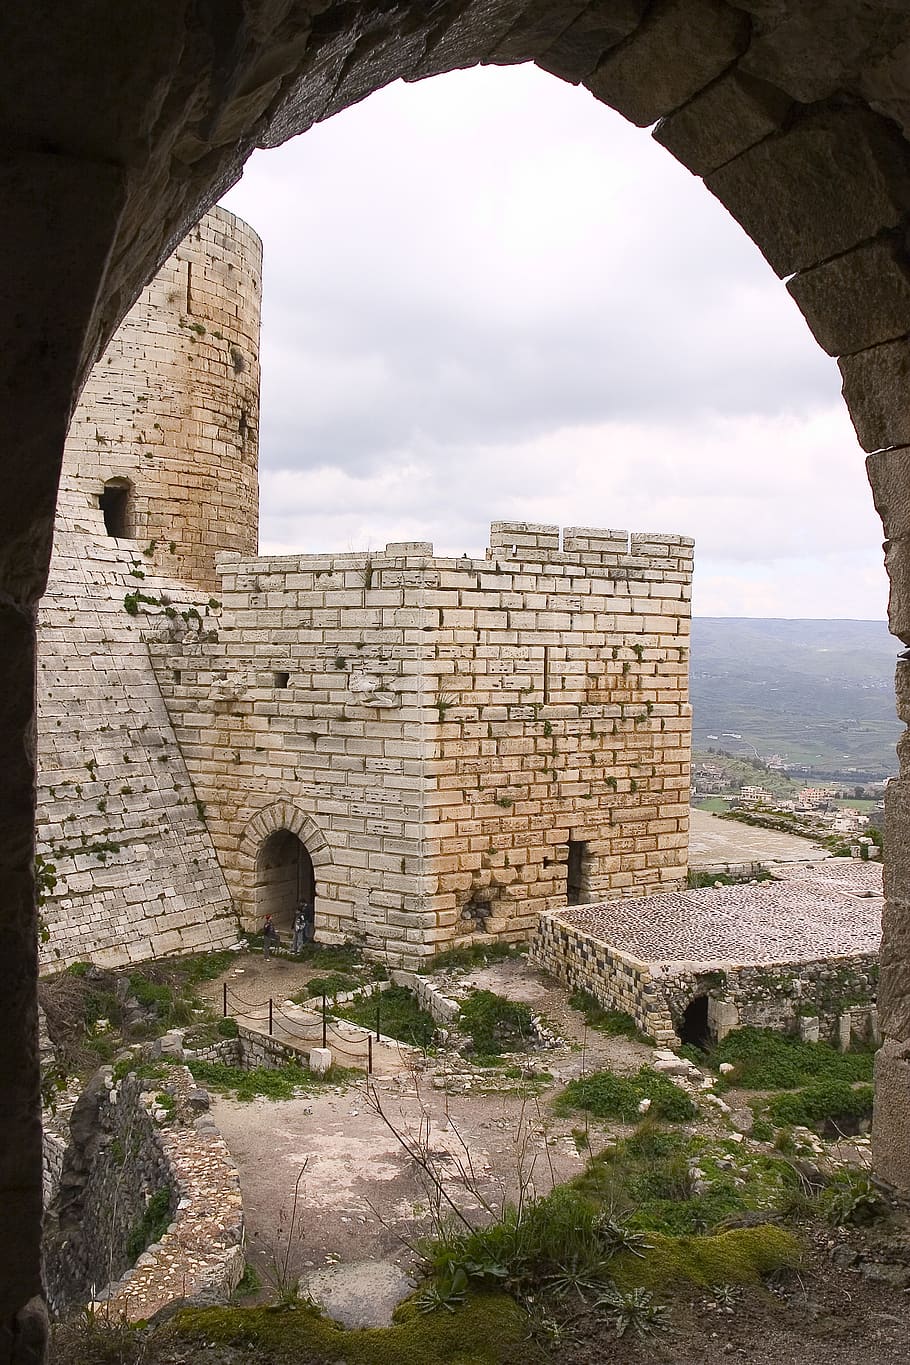 síria, crac des chevaliers, altheimat, castelo dos cruzados, unesco, castelos medievais, castelo dos kurds, arquitetura, história, estrutura construída